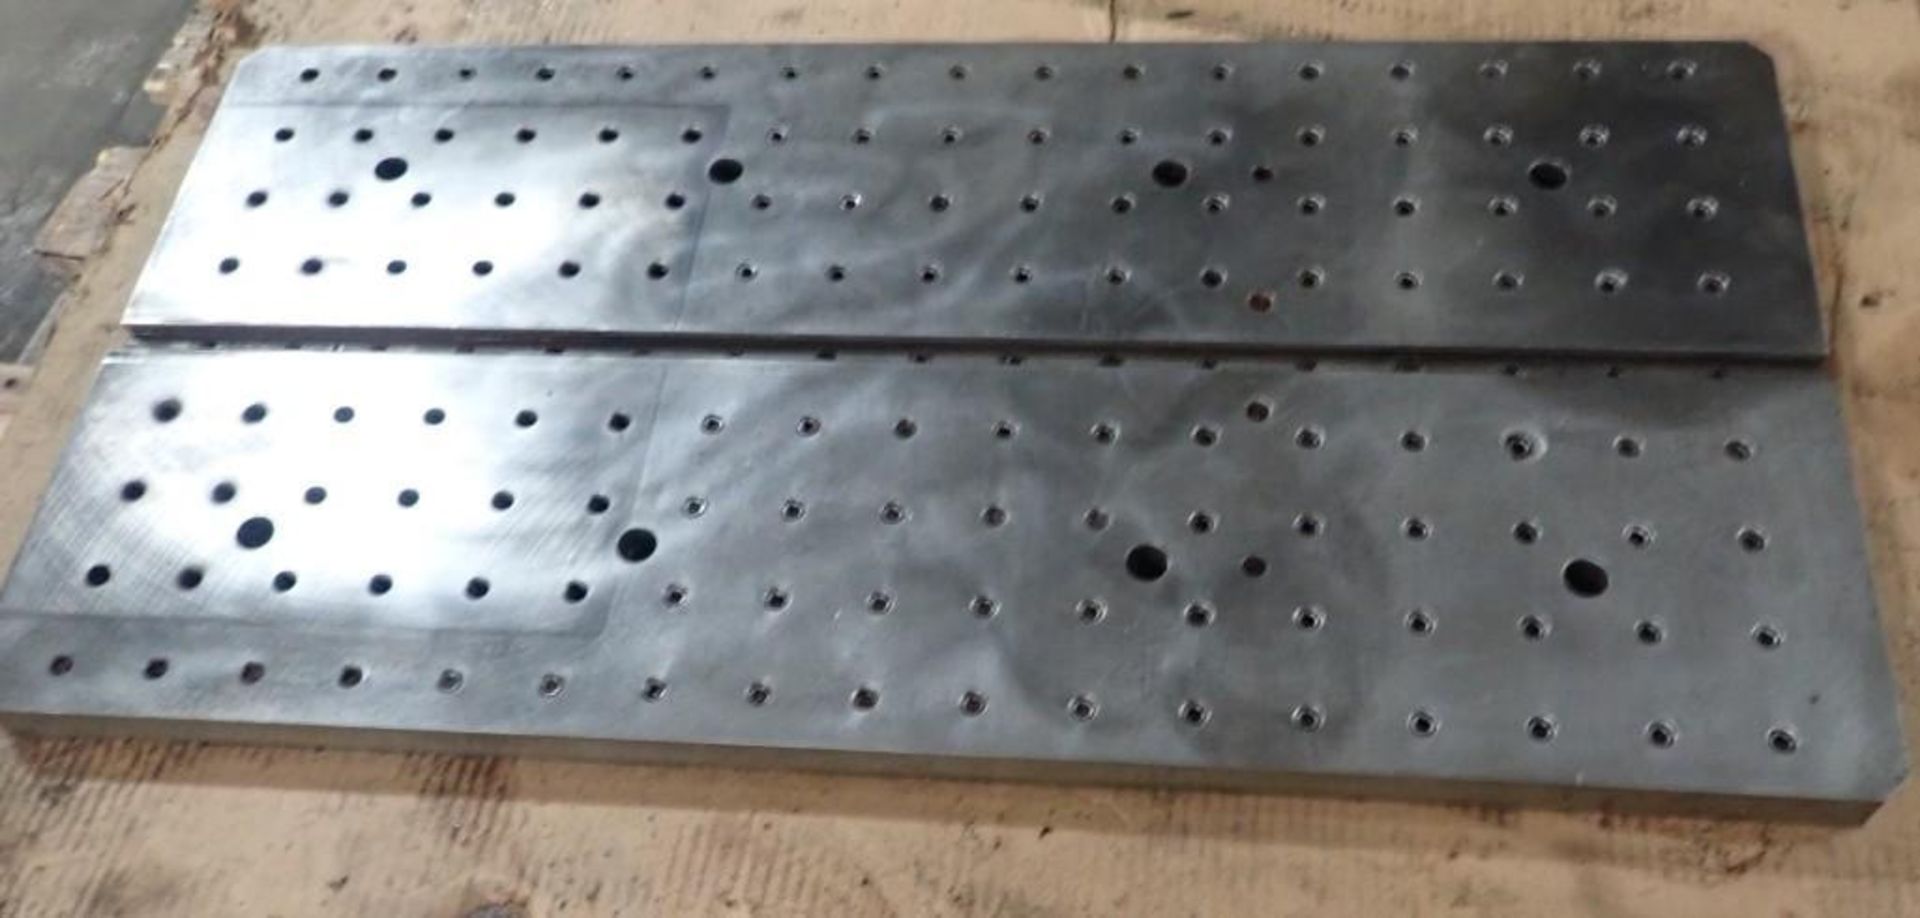 18" x 36" Steel Machining Sub Plate / Setup Table - Image 3 of 4